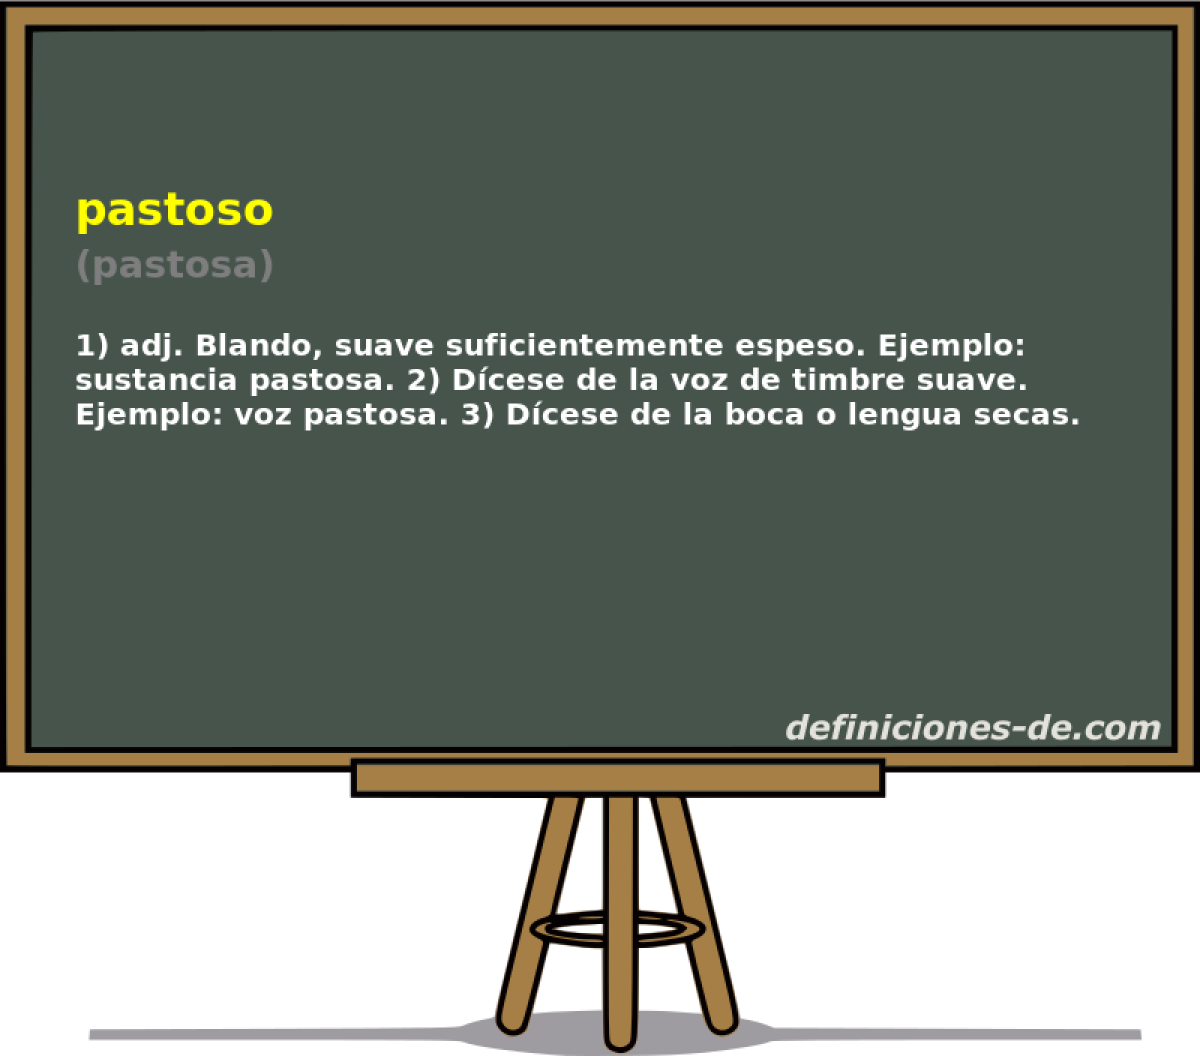 pastoso (pastosa)